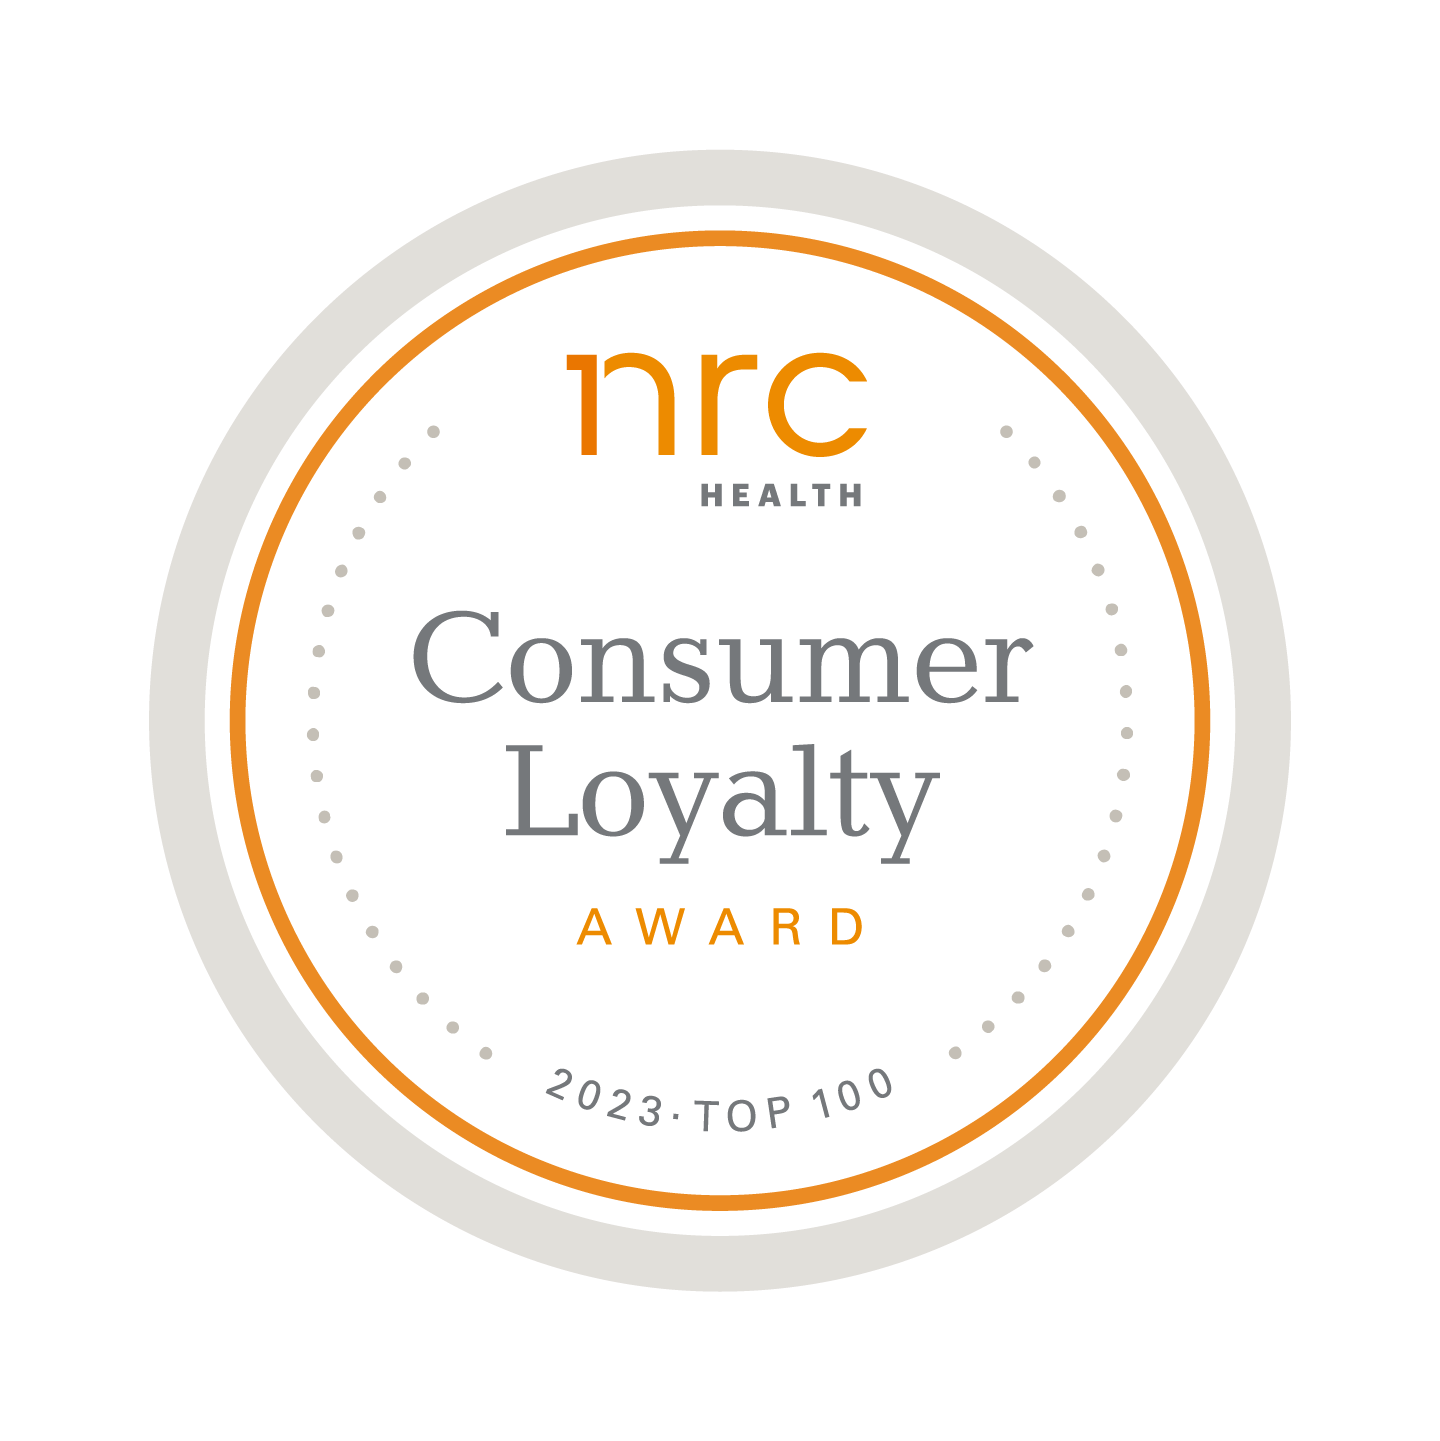 NRC Consumer Loyalty